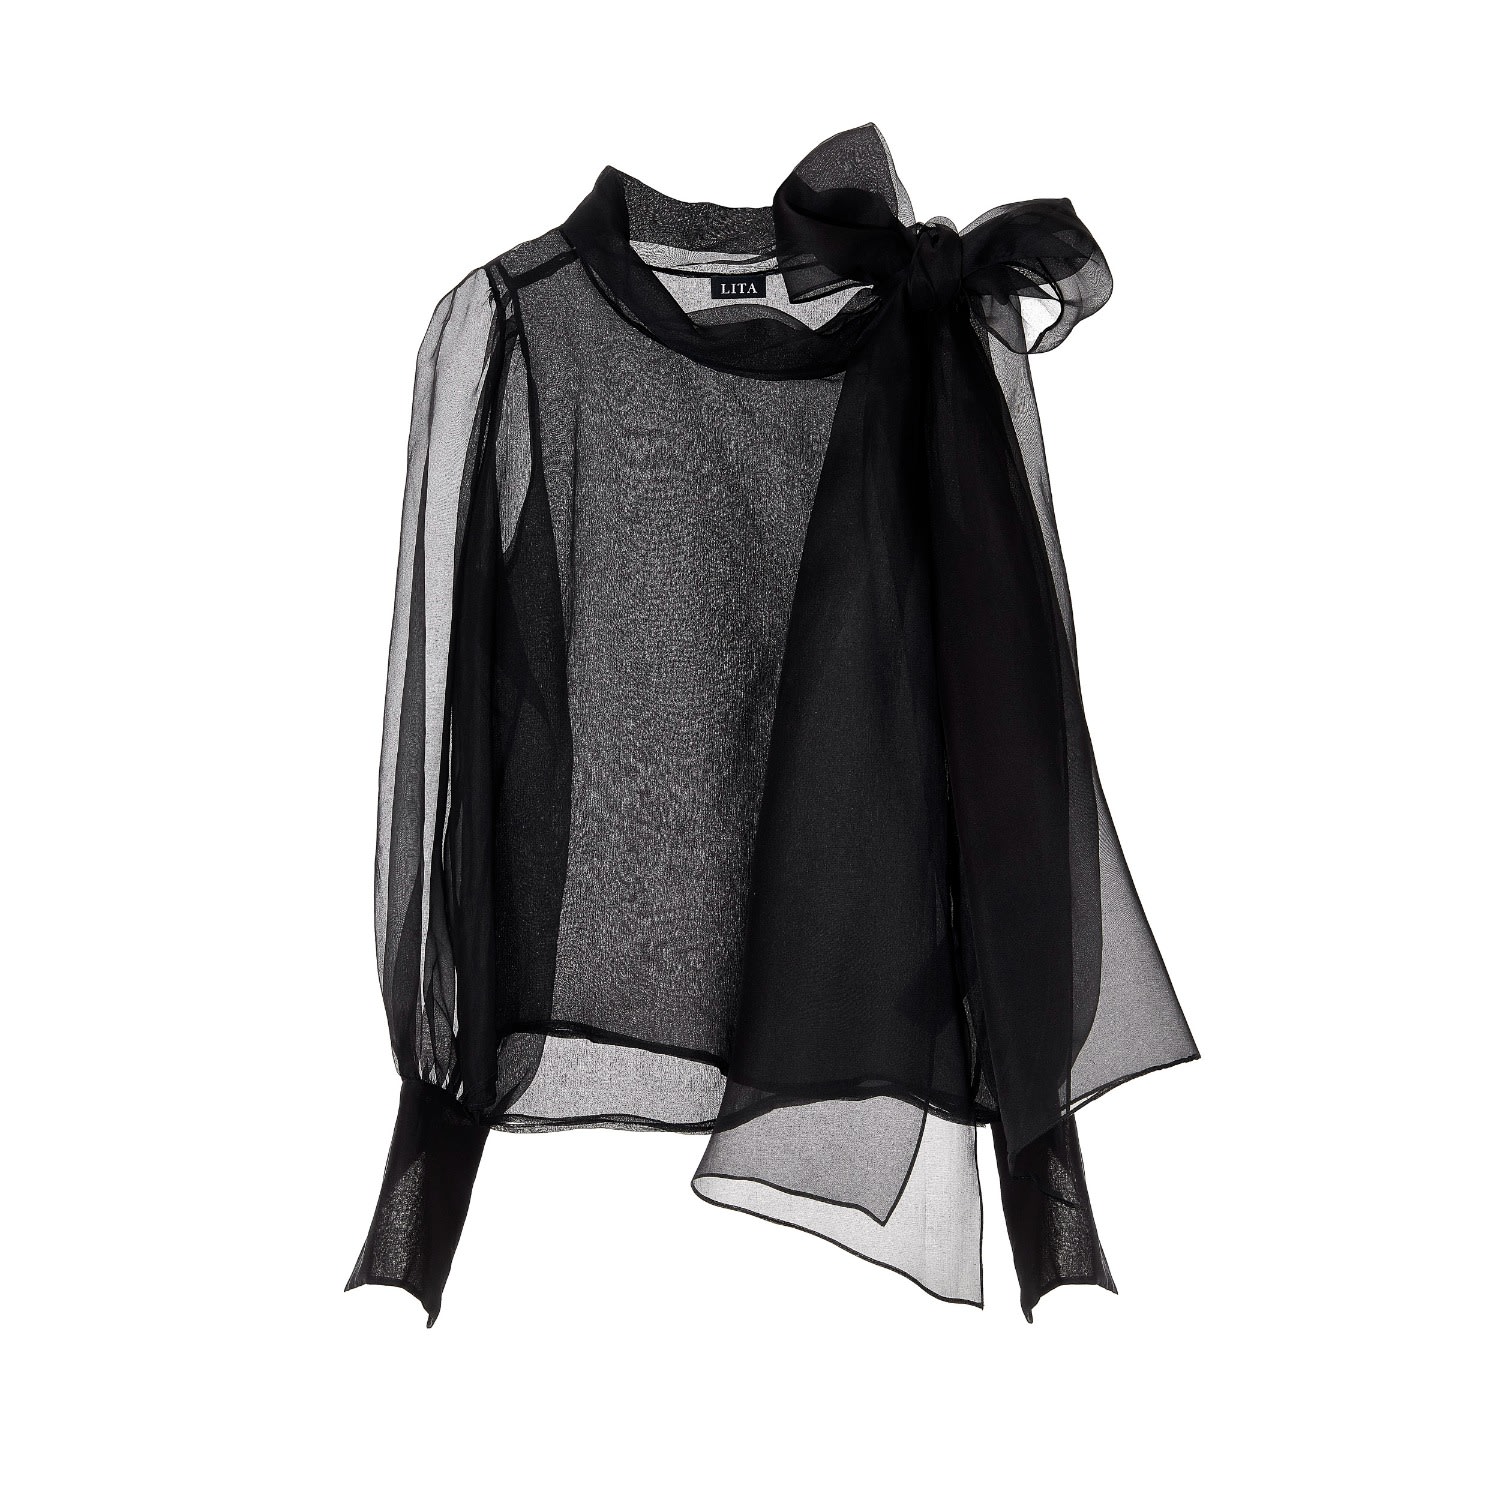 Women’s Sheer Black Organza Blouse Medium Lita Couture